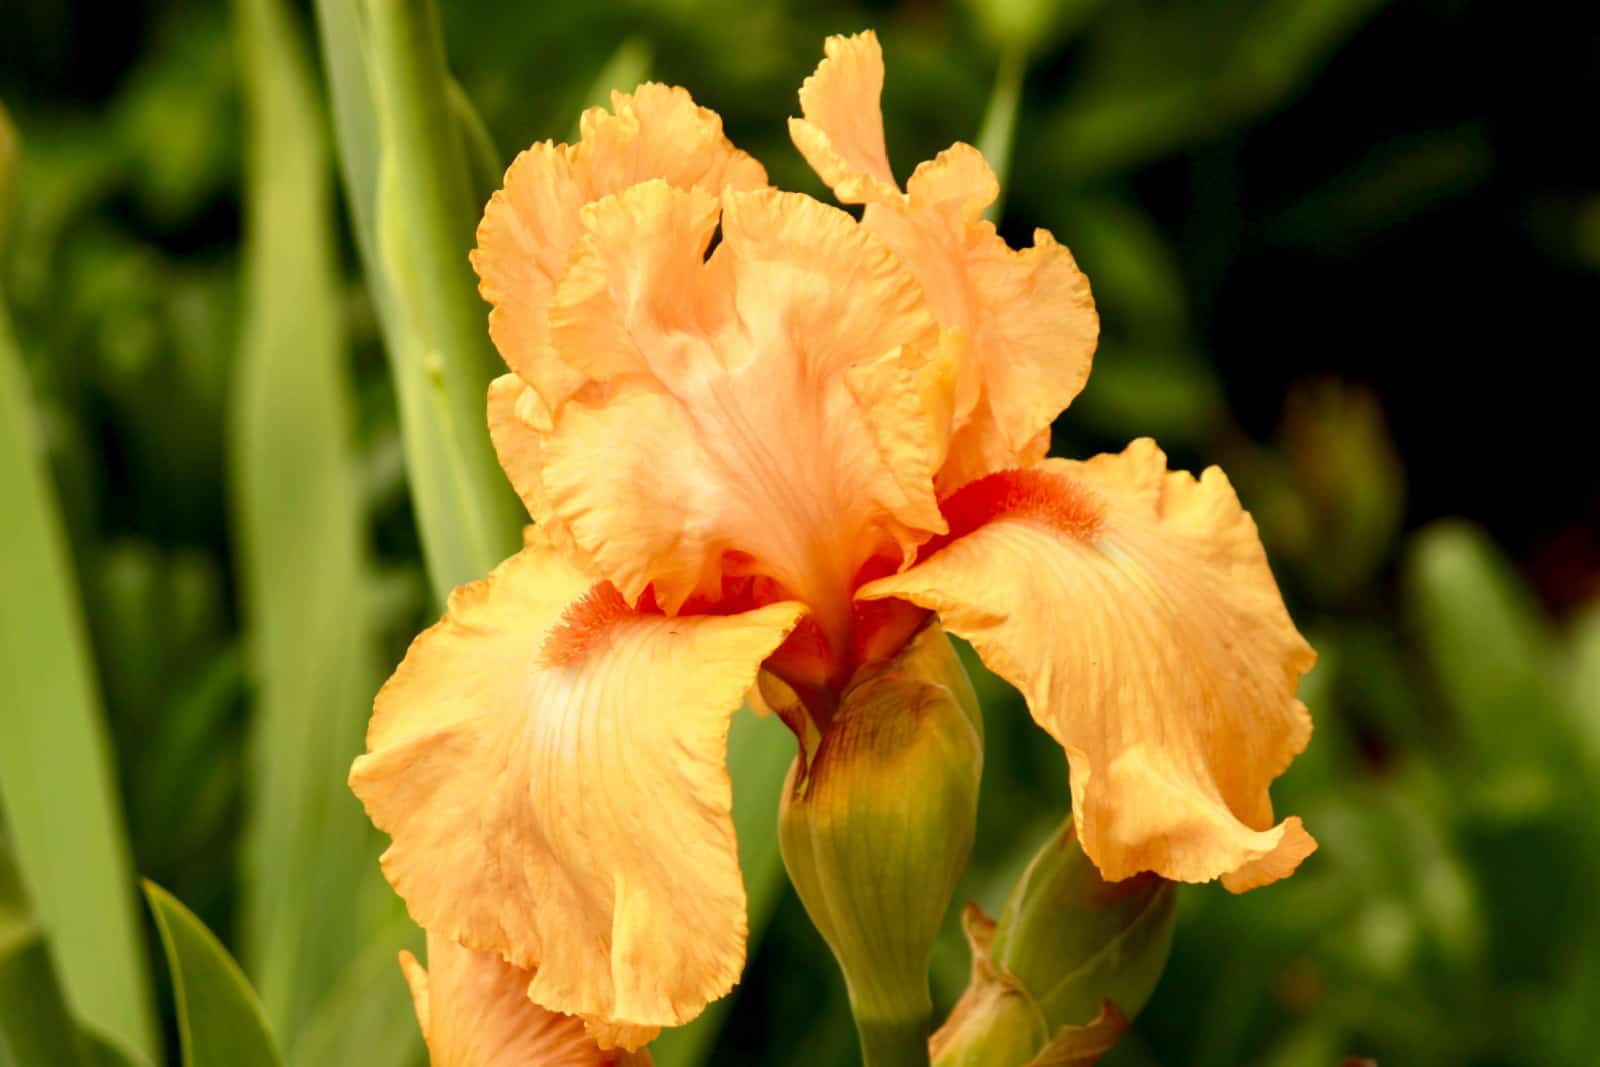 Yellow Iris flower with an orange beard